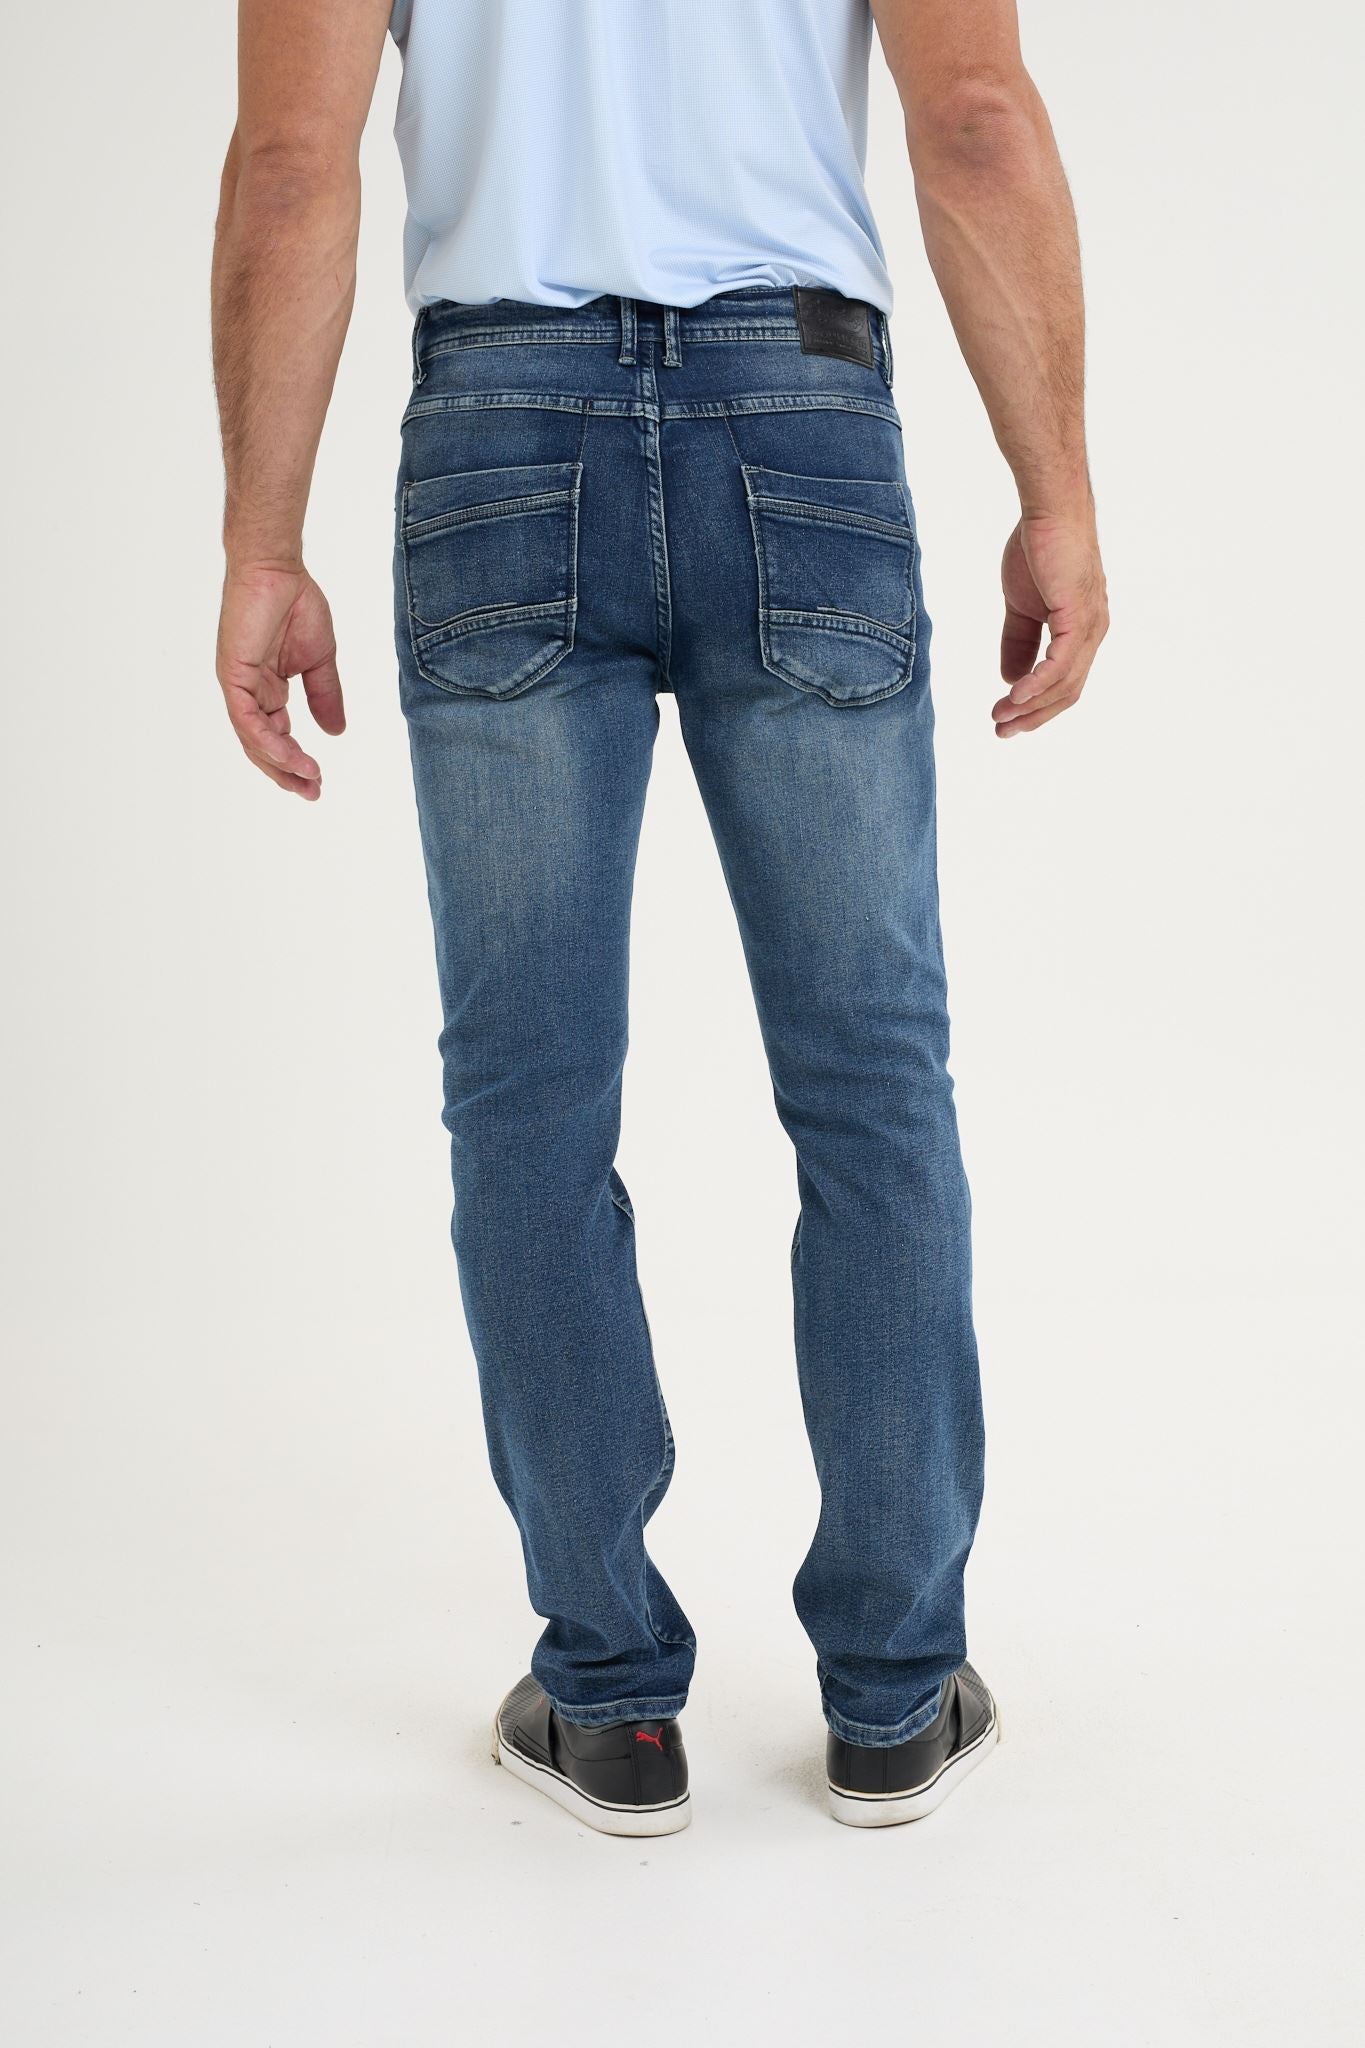 Slim leg jeans